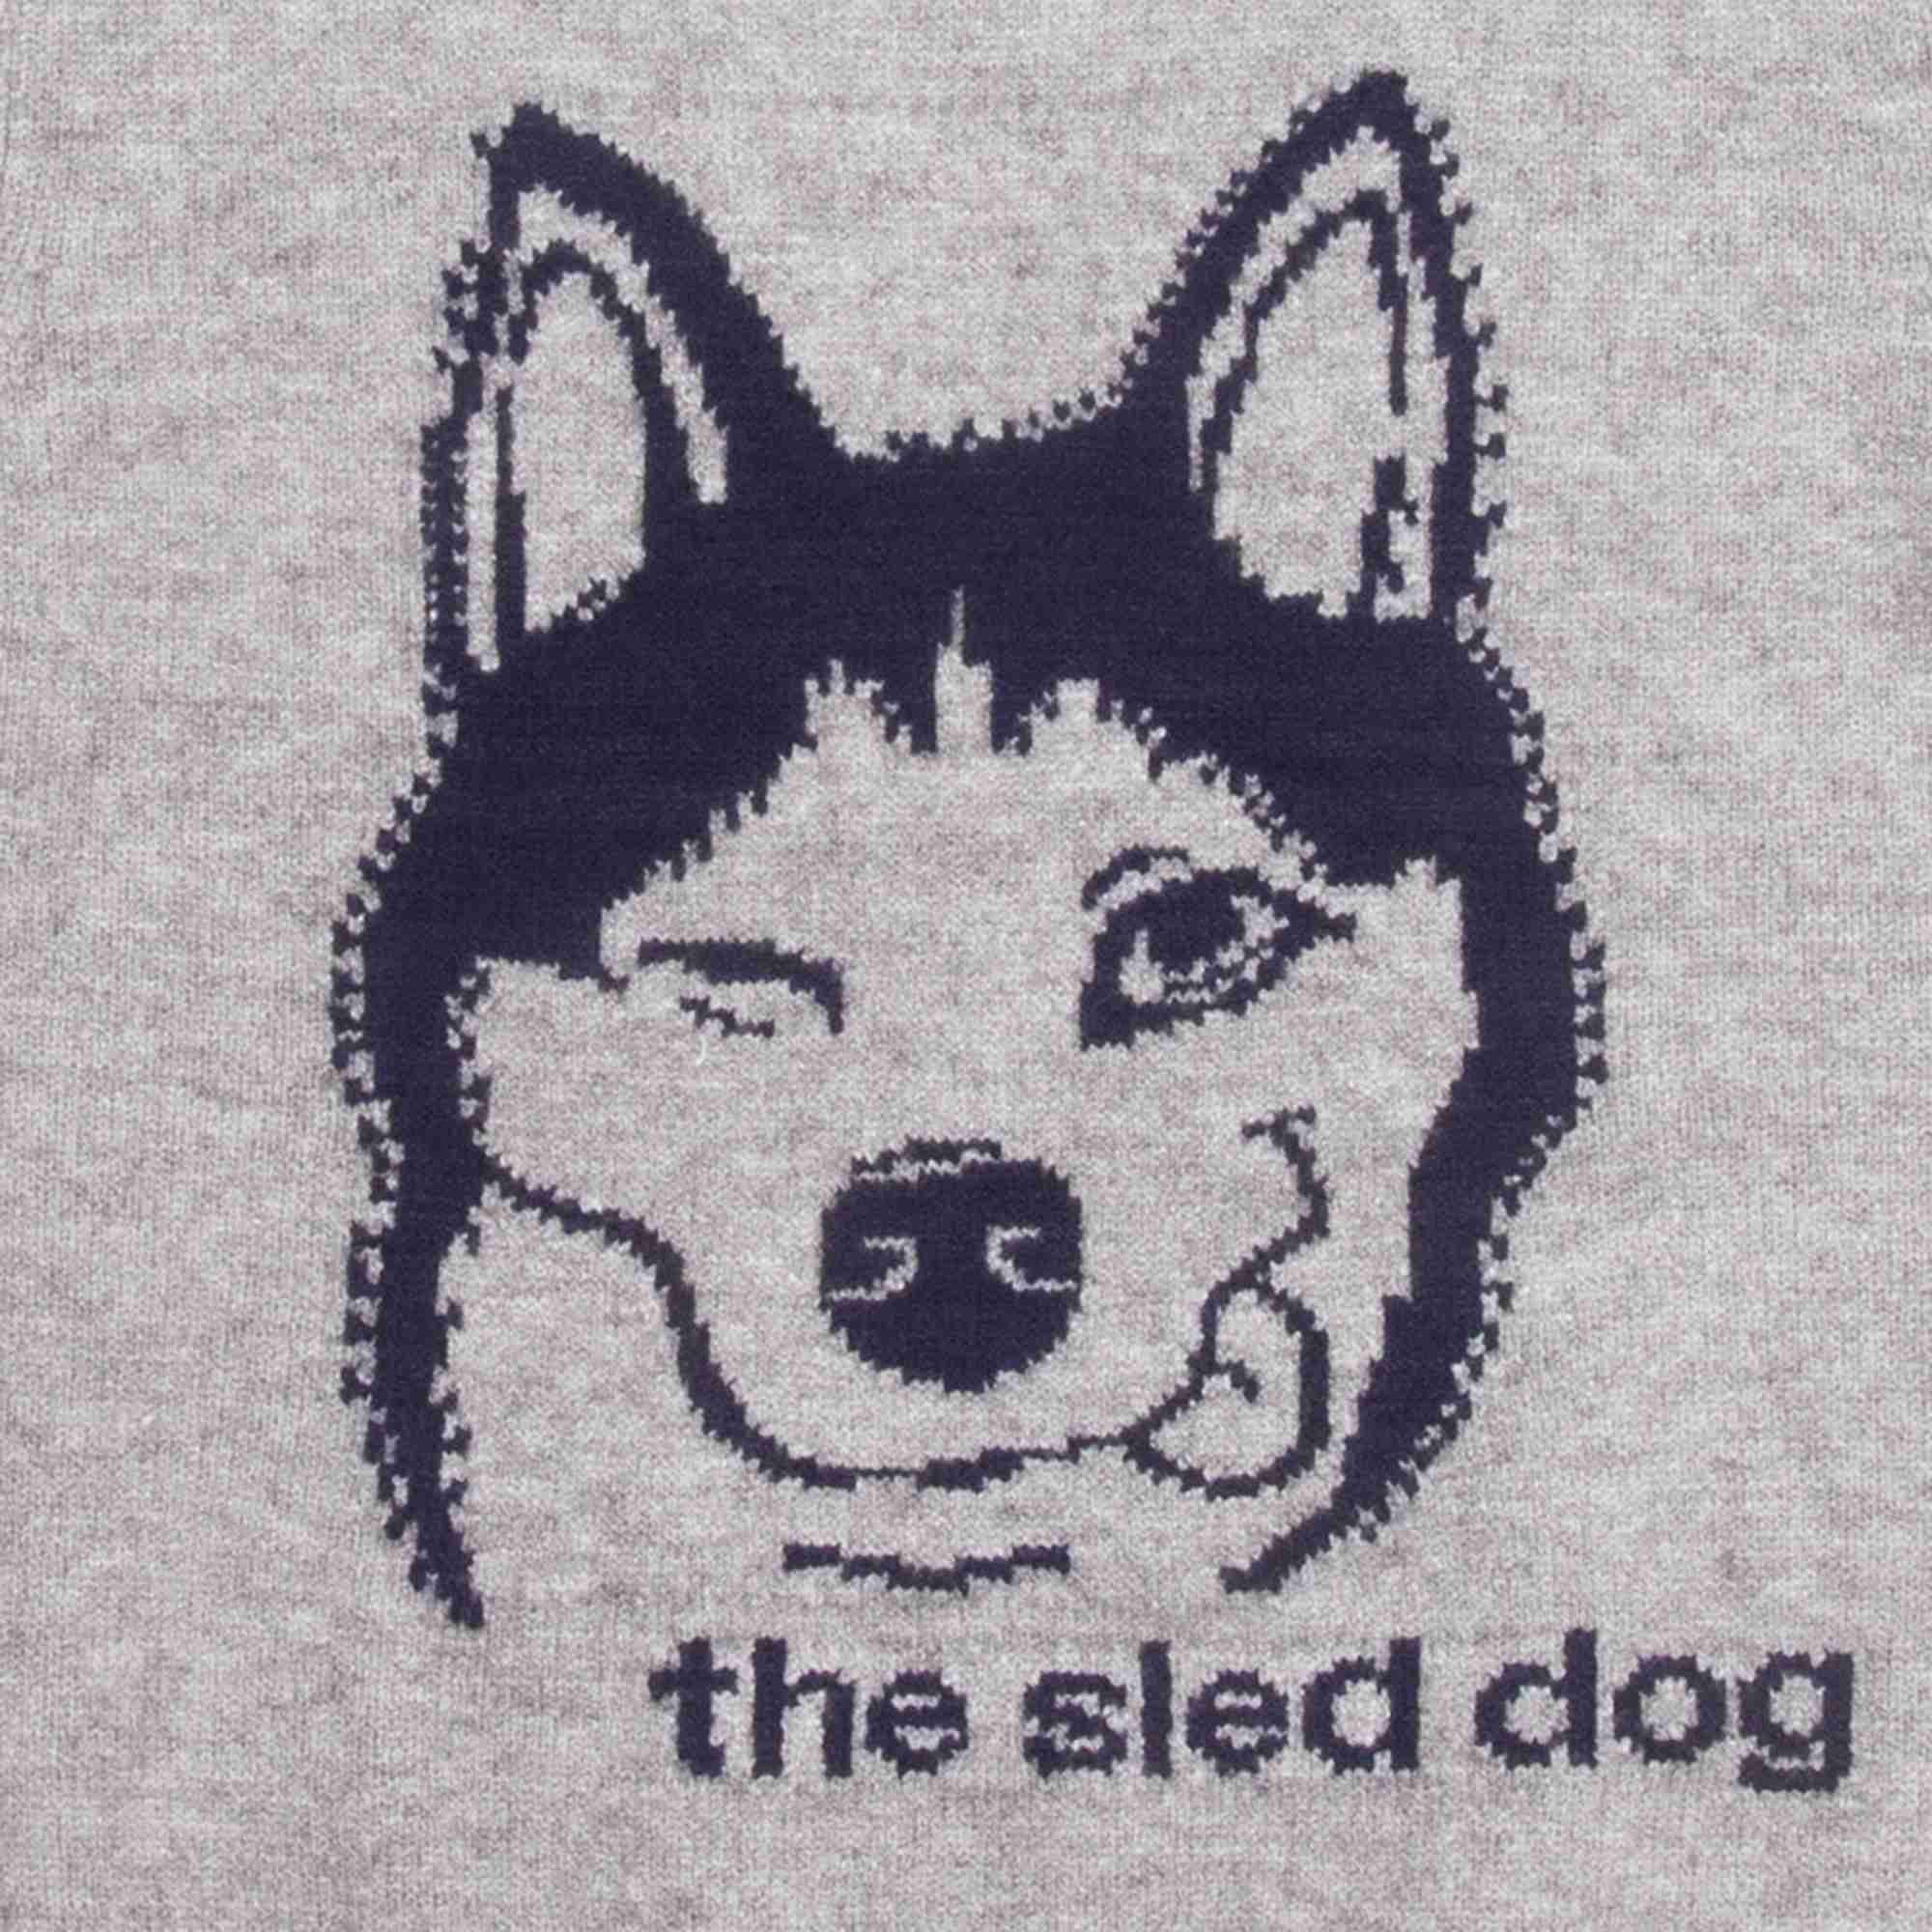 Mawi maglia tricot  stampa cane - Mawi